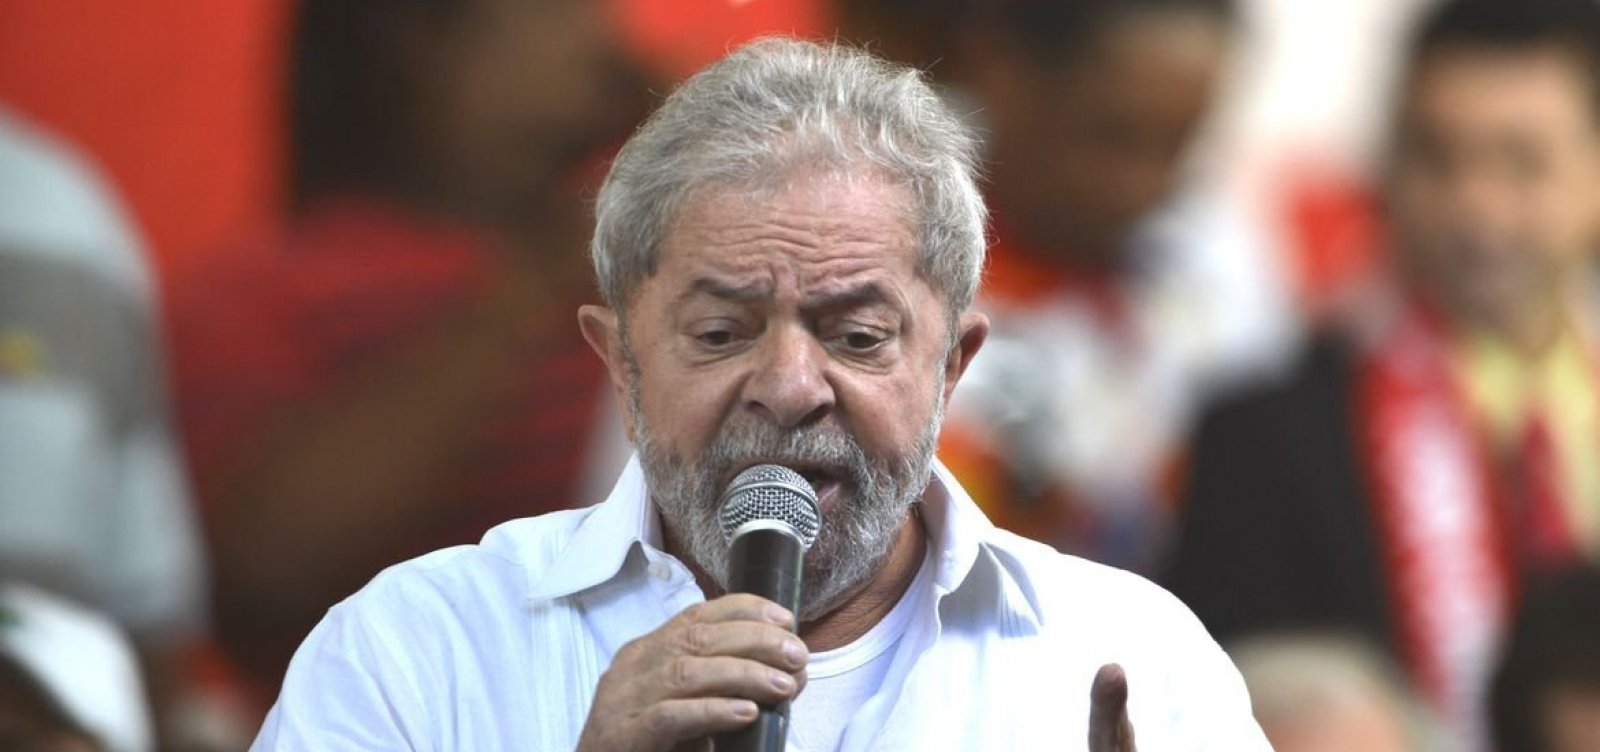 Carro de Lula escapa de cerco de bolsonaristas no interior de São Paulo; veja vídeo